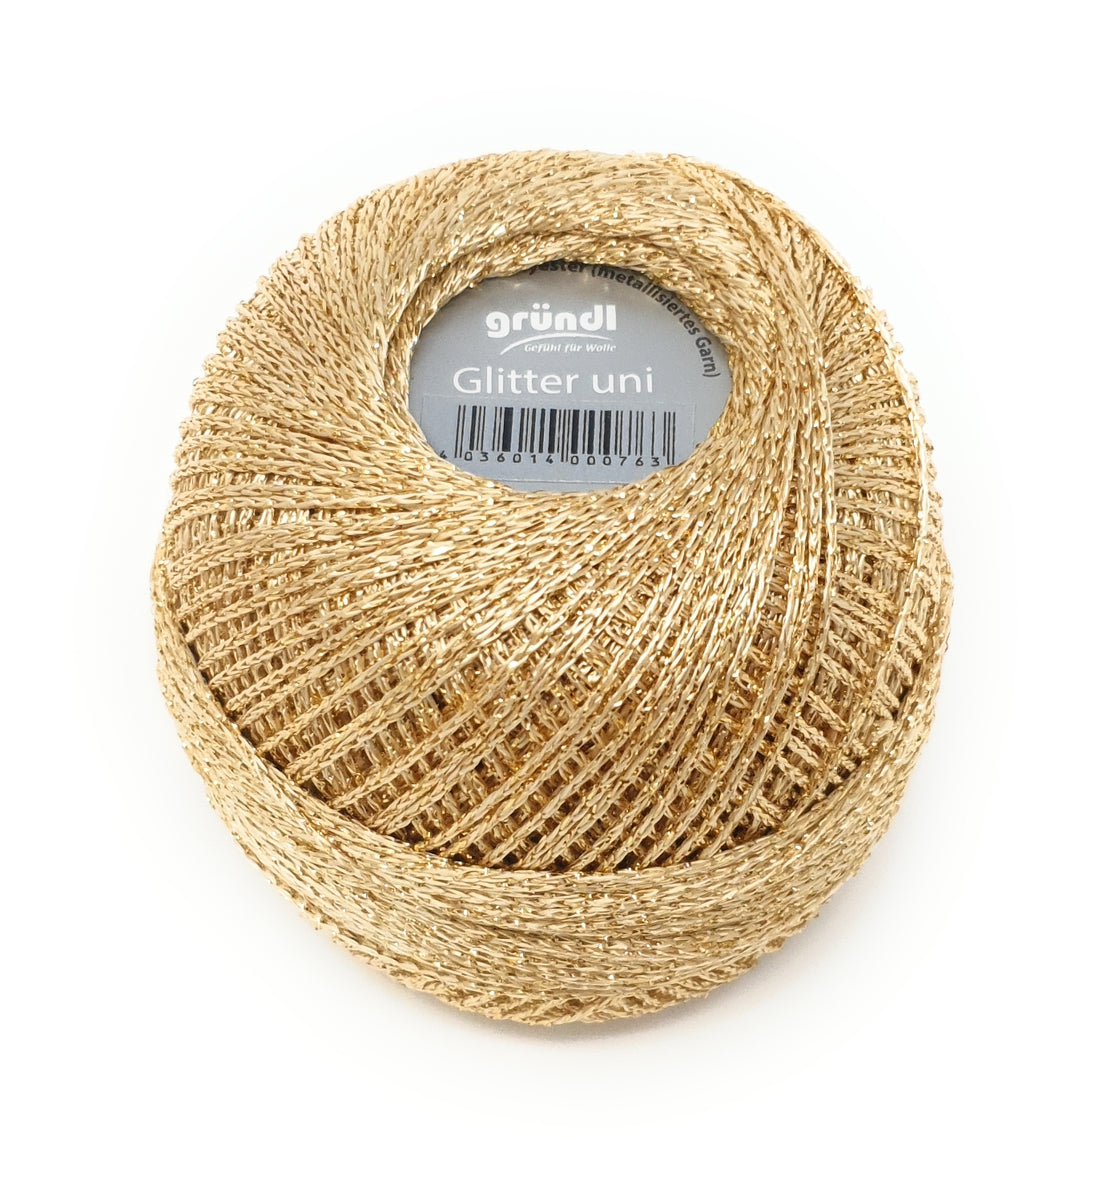 Grundl Glitter Uni Crochet 25g – Readicut